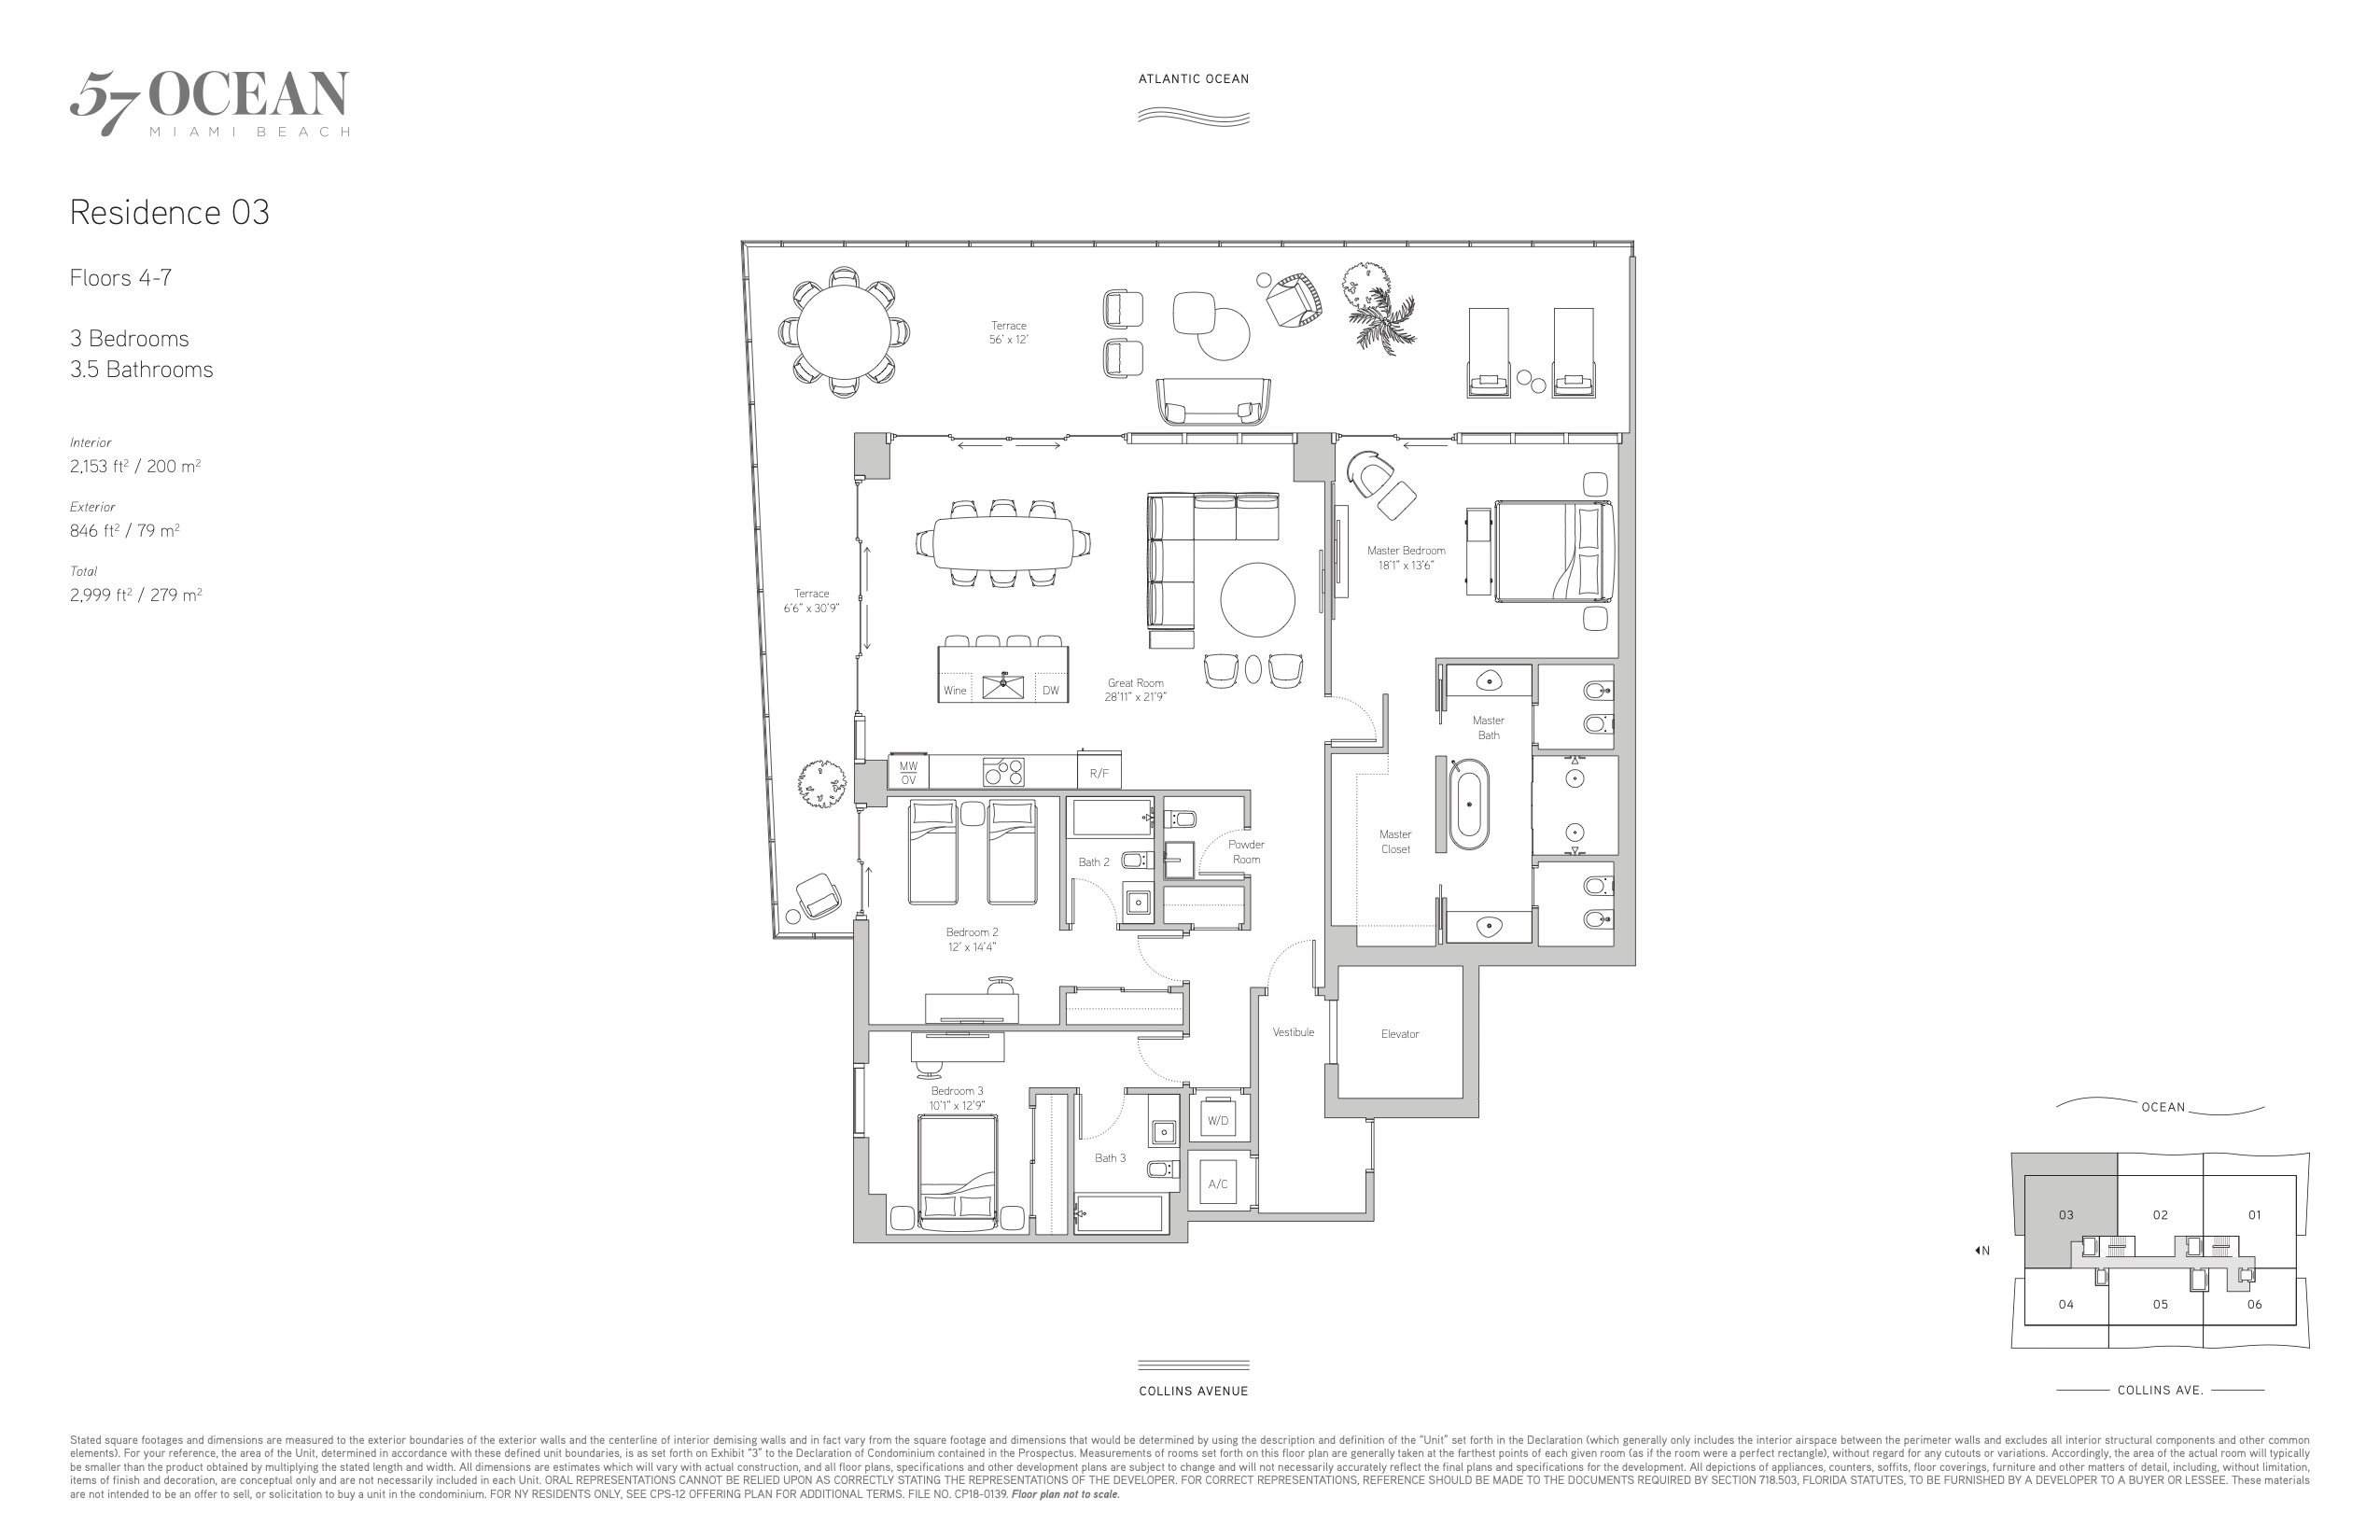 Floor Plan for 57 Ocean Miami Beach Floorplans, Residence 03